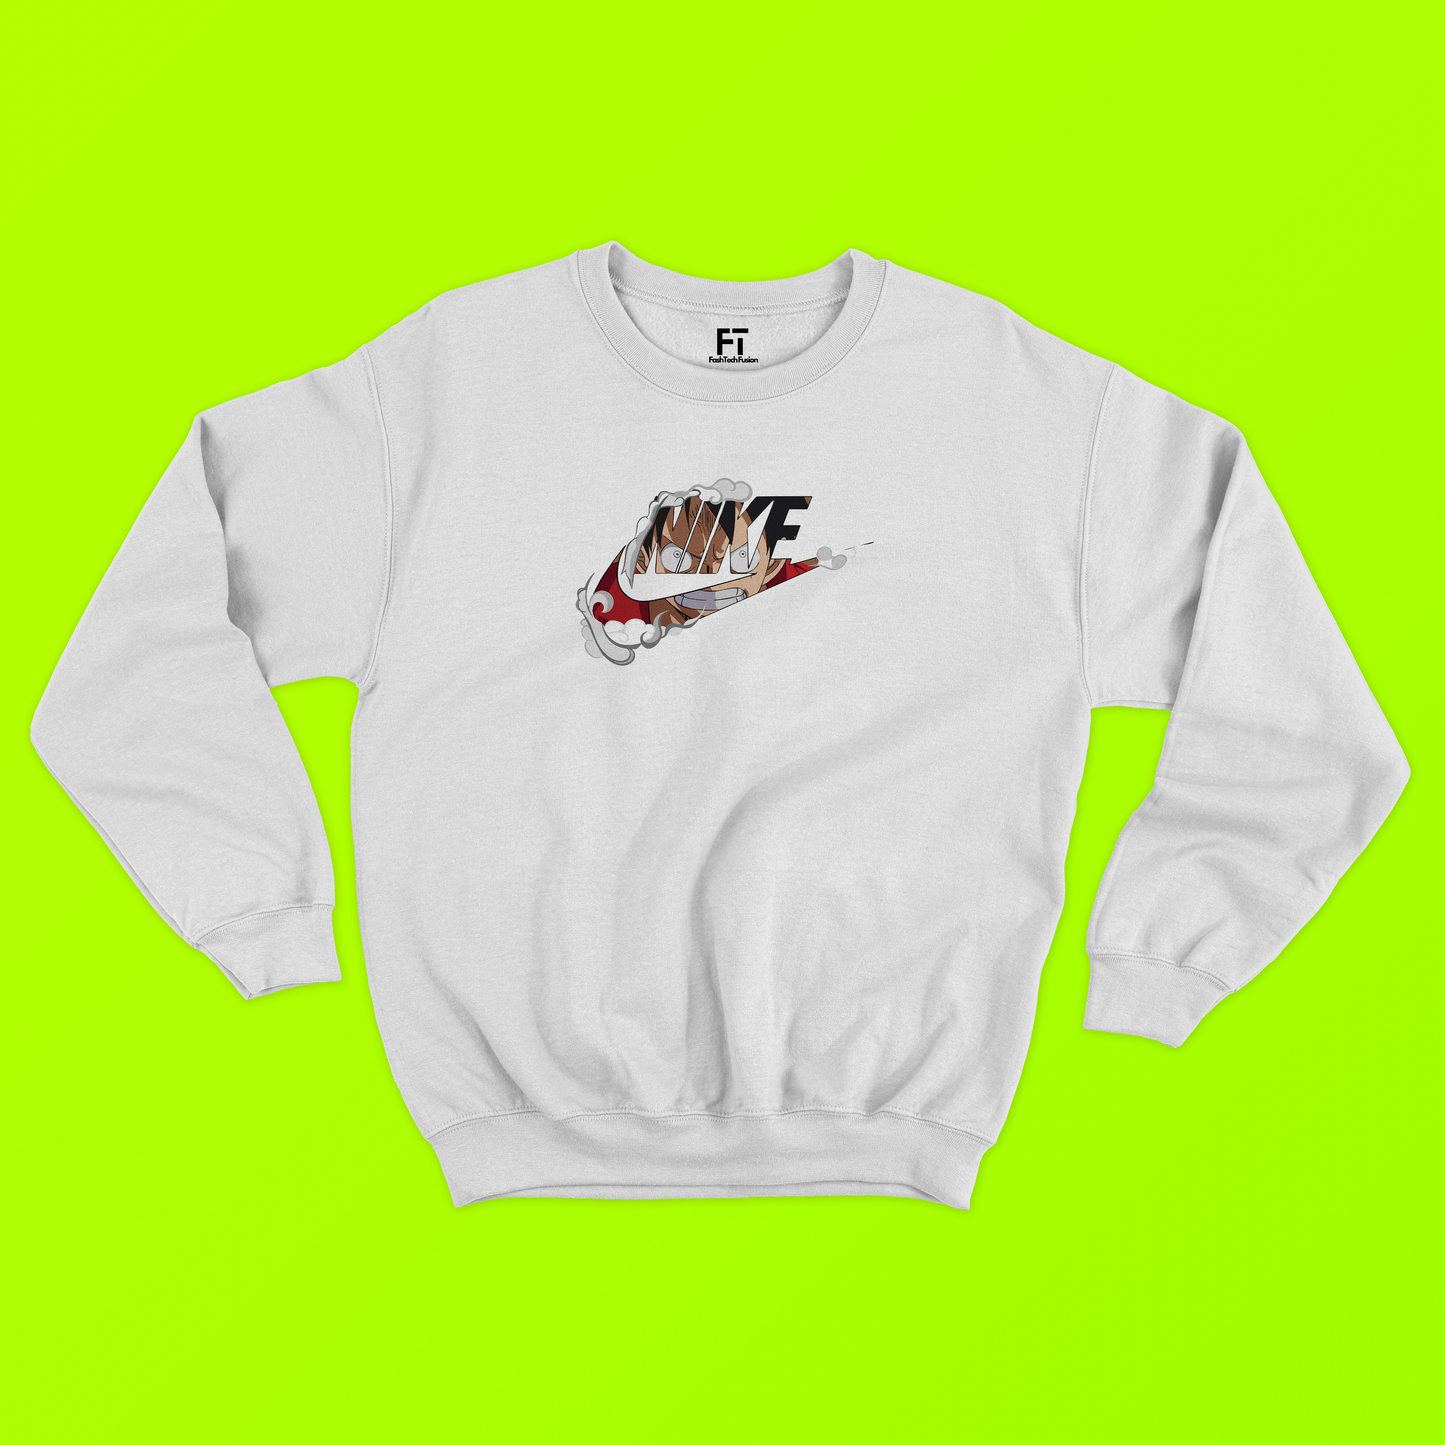 One Piece Nike 2 Sweatshirt